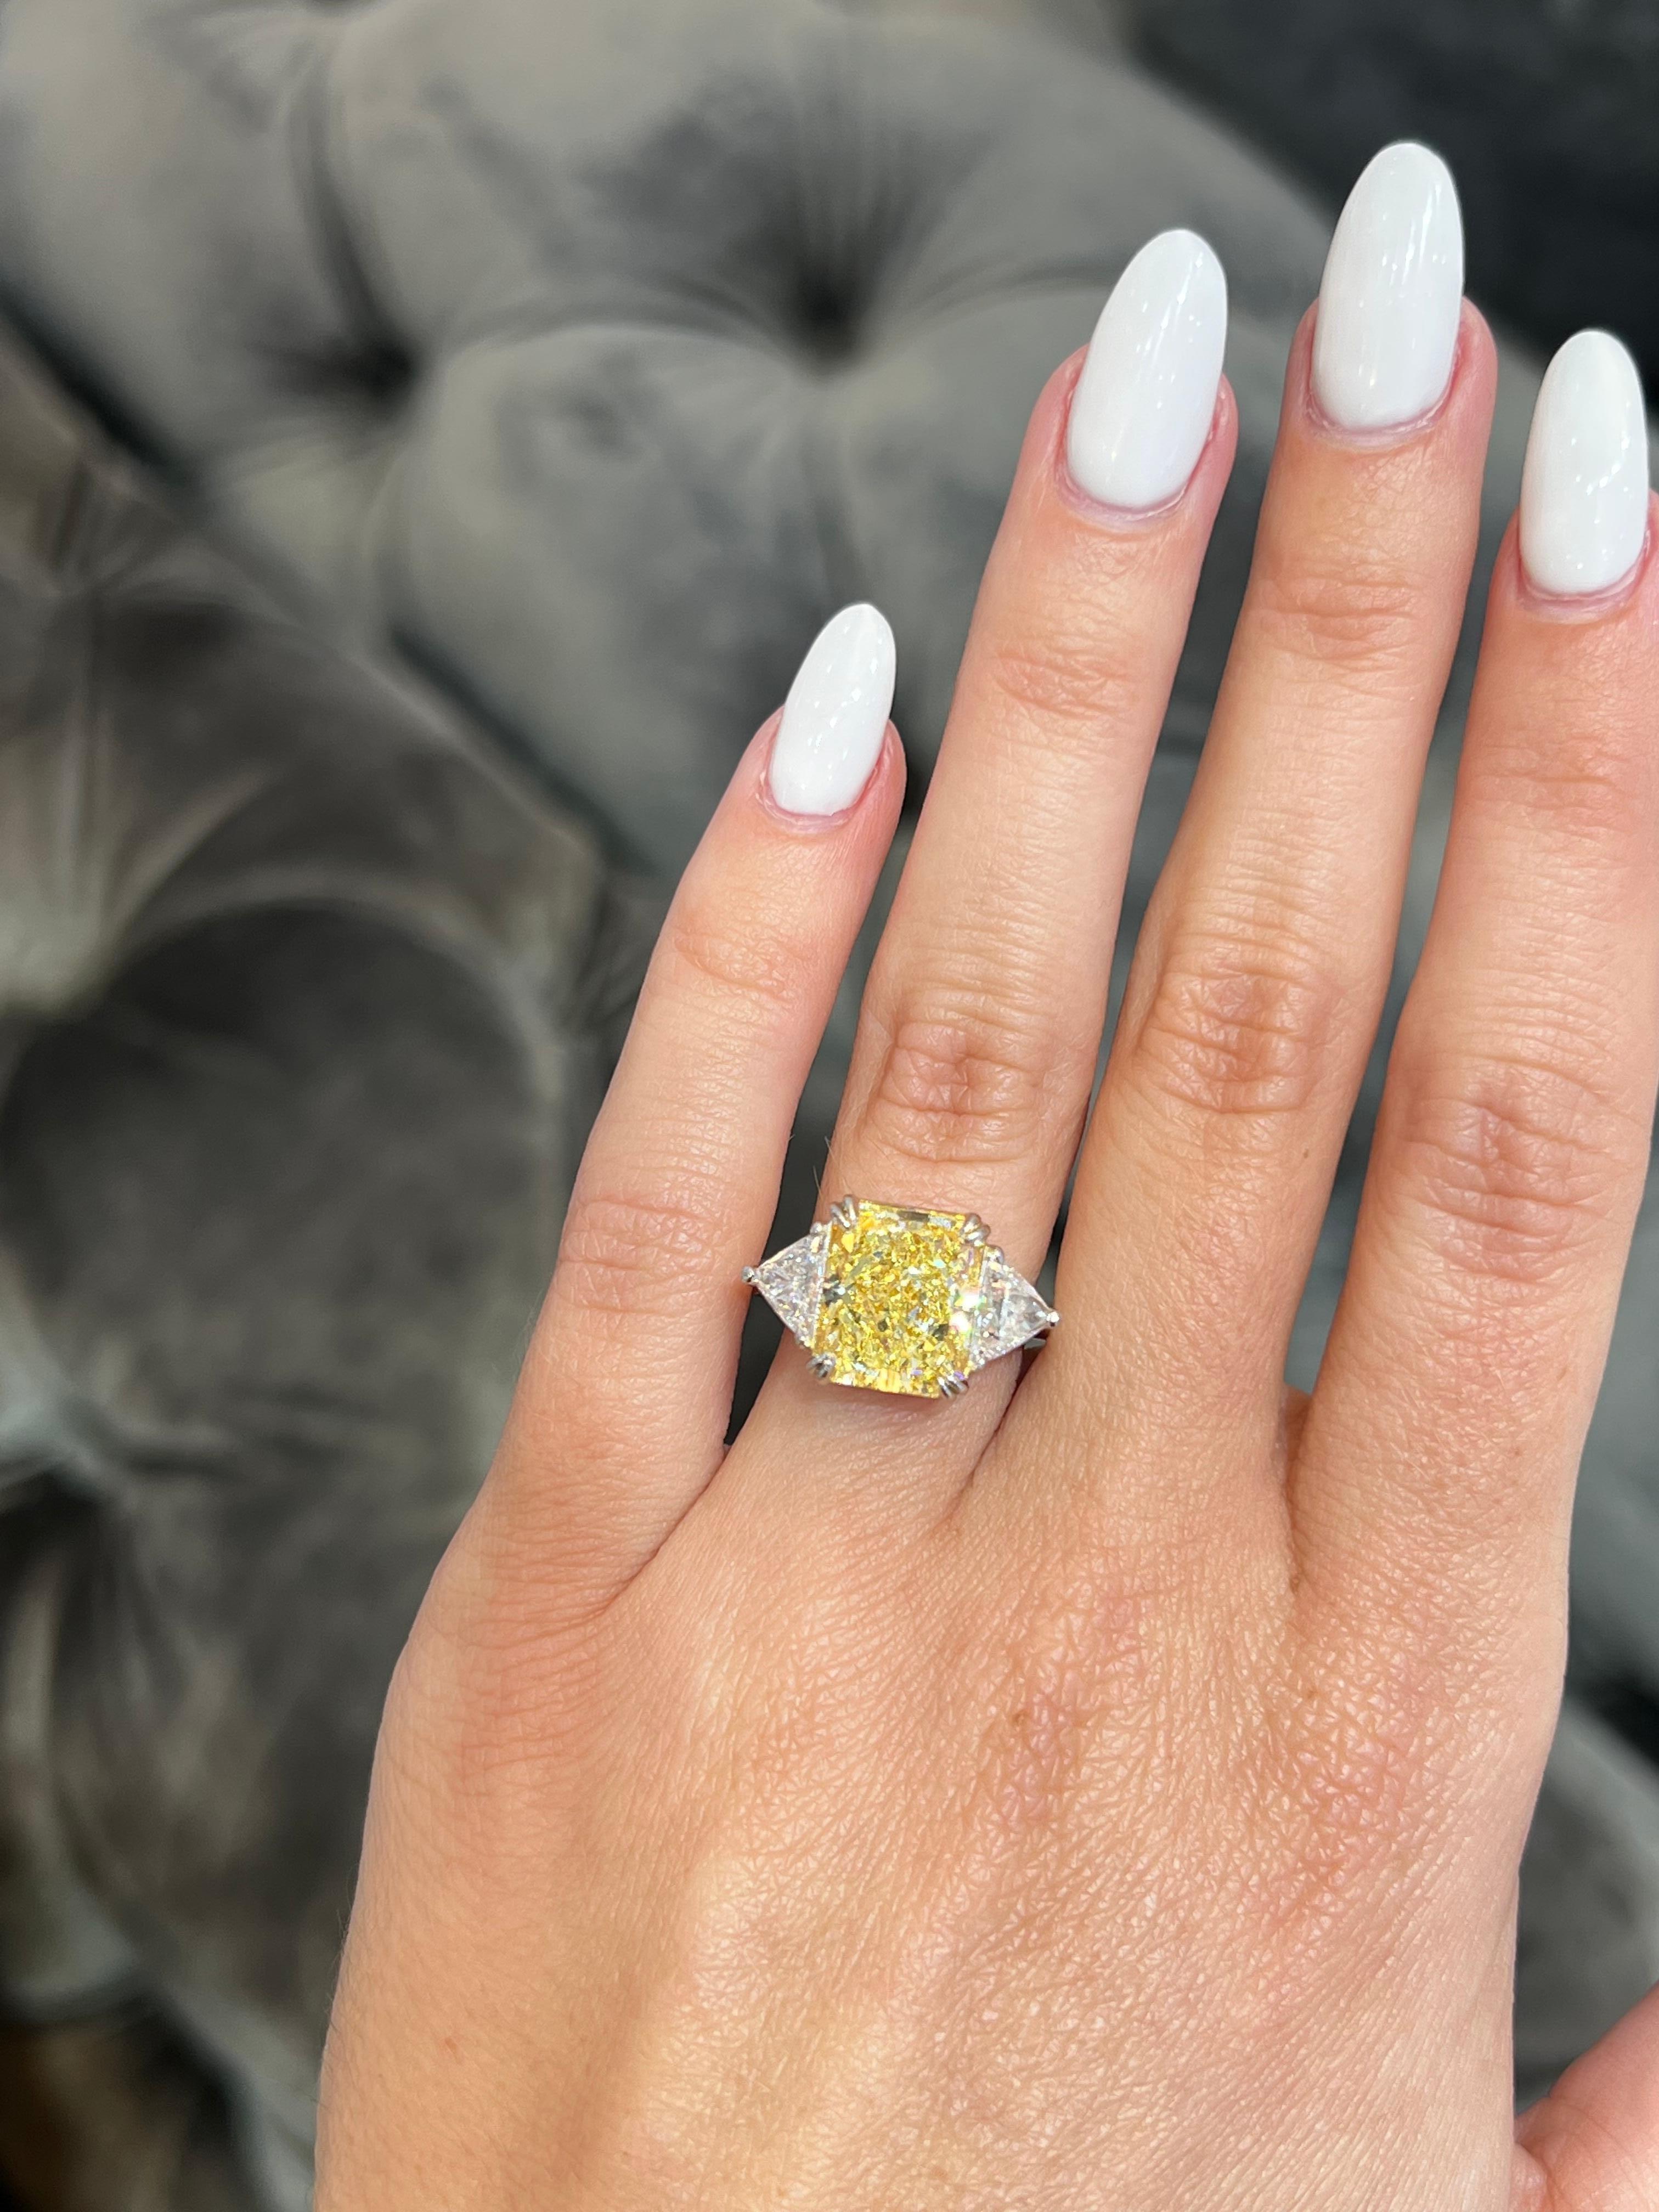 David Rosenberg 5.68 ct Fancy Light Yellow Radiant GIA Diamond Engagement Ring For Sale 5